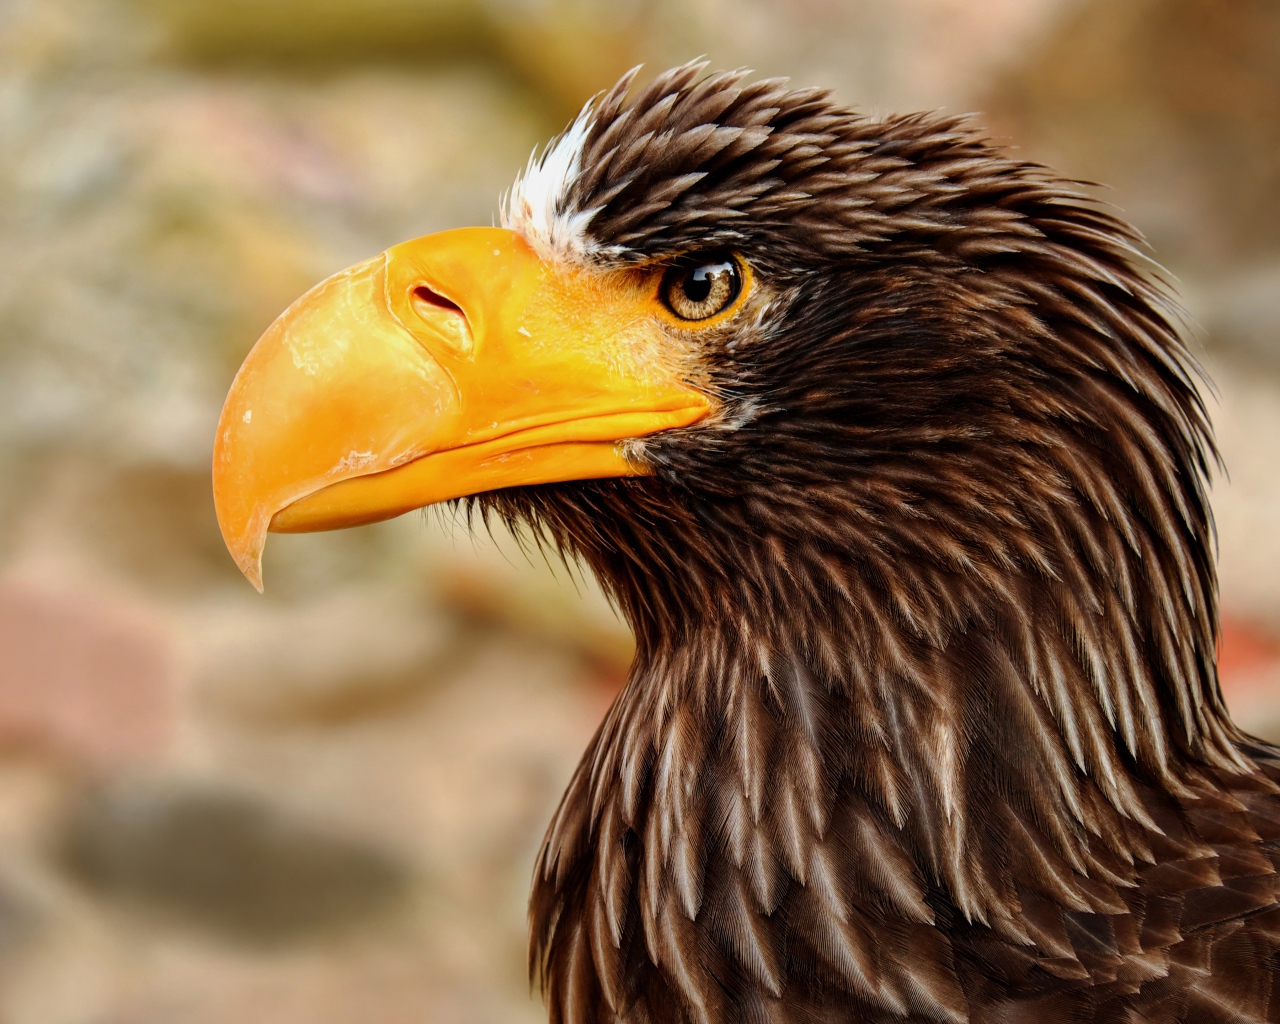 Giant eagle with a sharp yellow beak